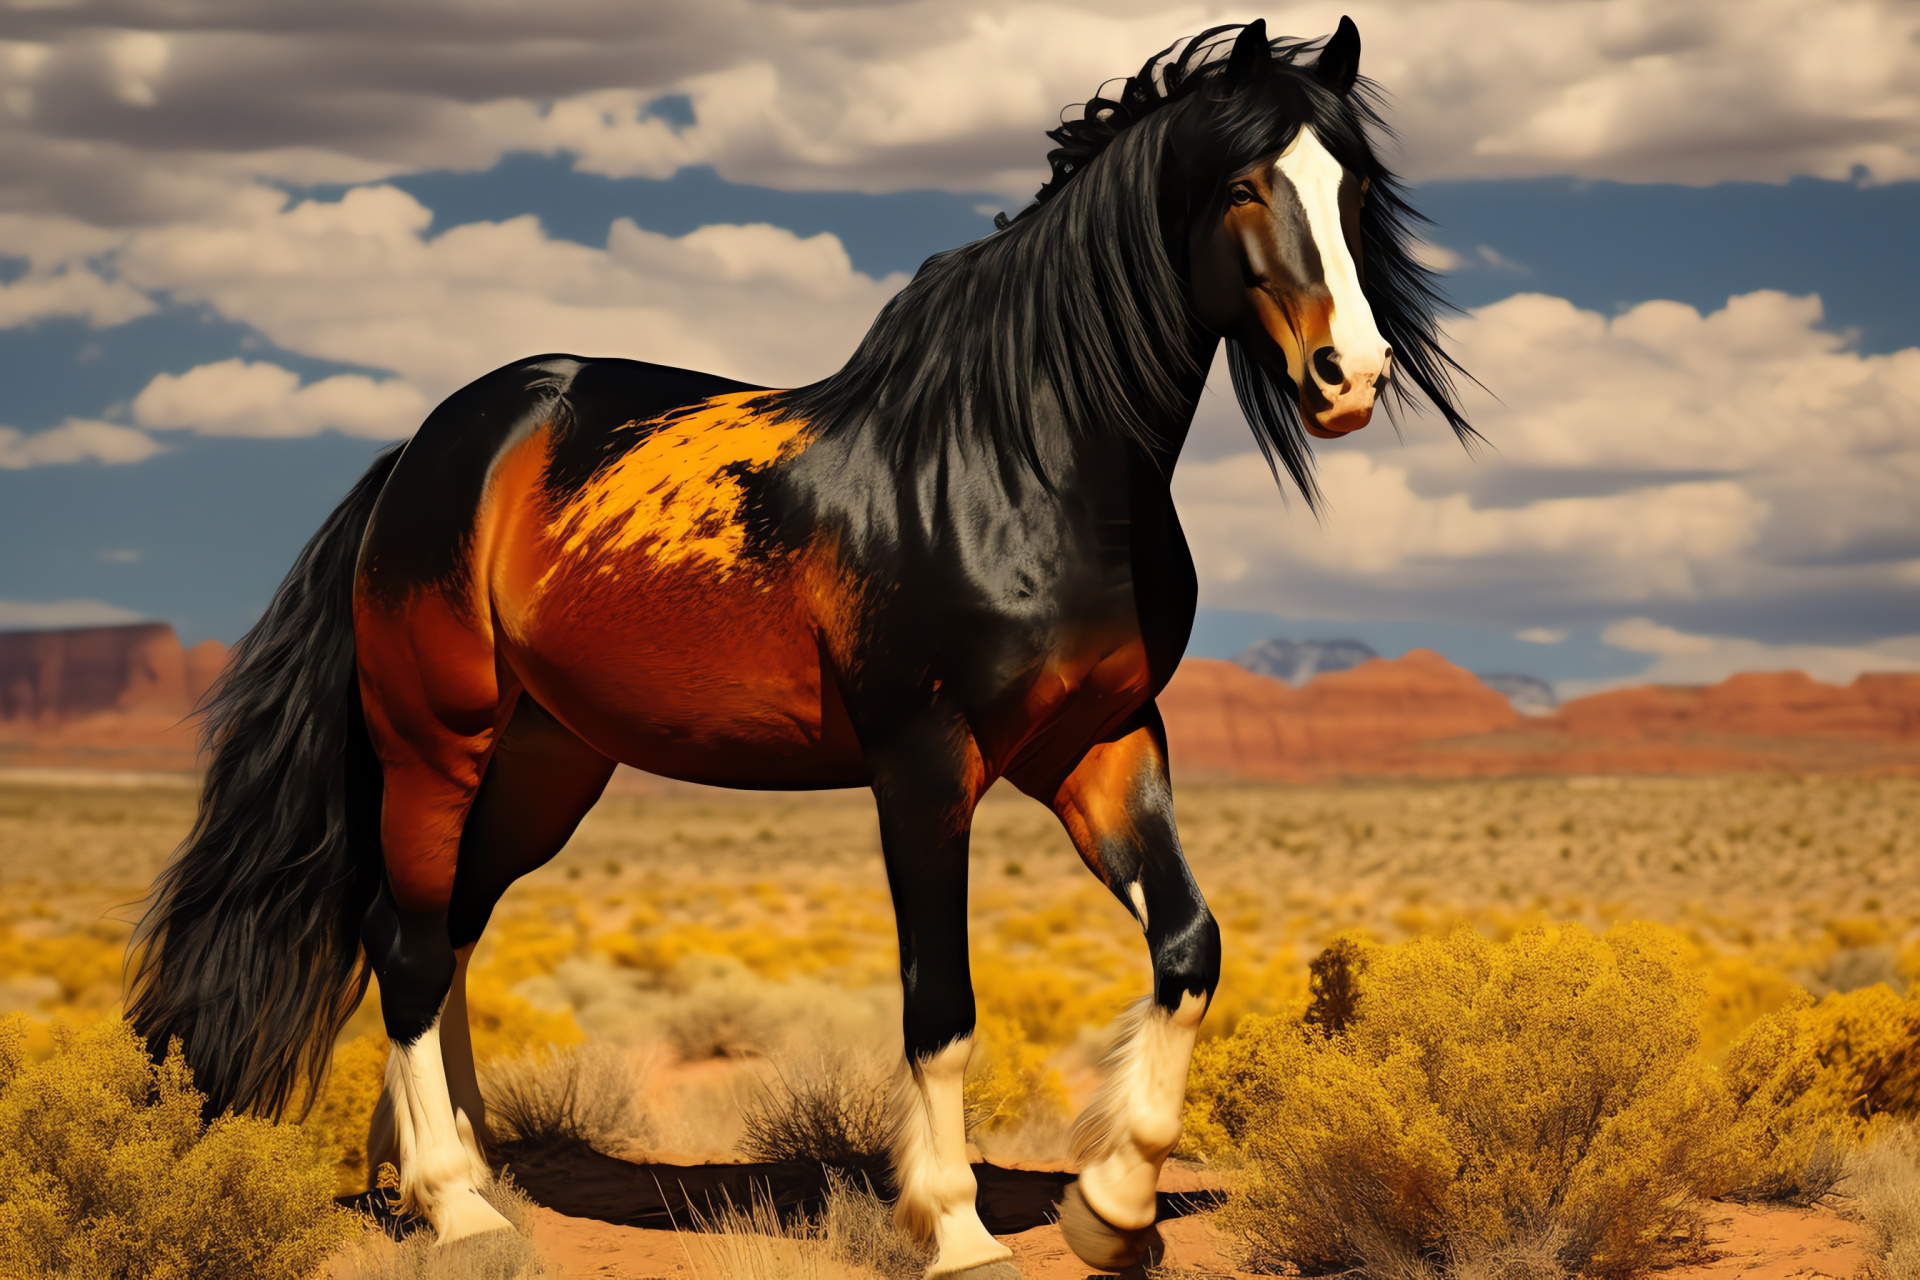 Wild Horse, Equine majesty, Equestrian beauty, Sleek black stallion, Gleaming mane, HD Desktop Image